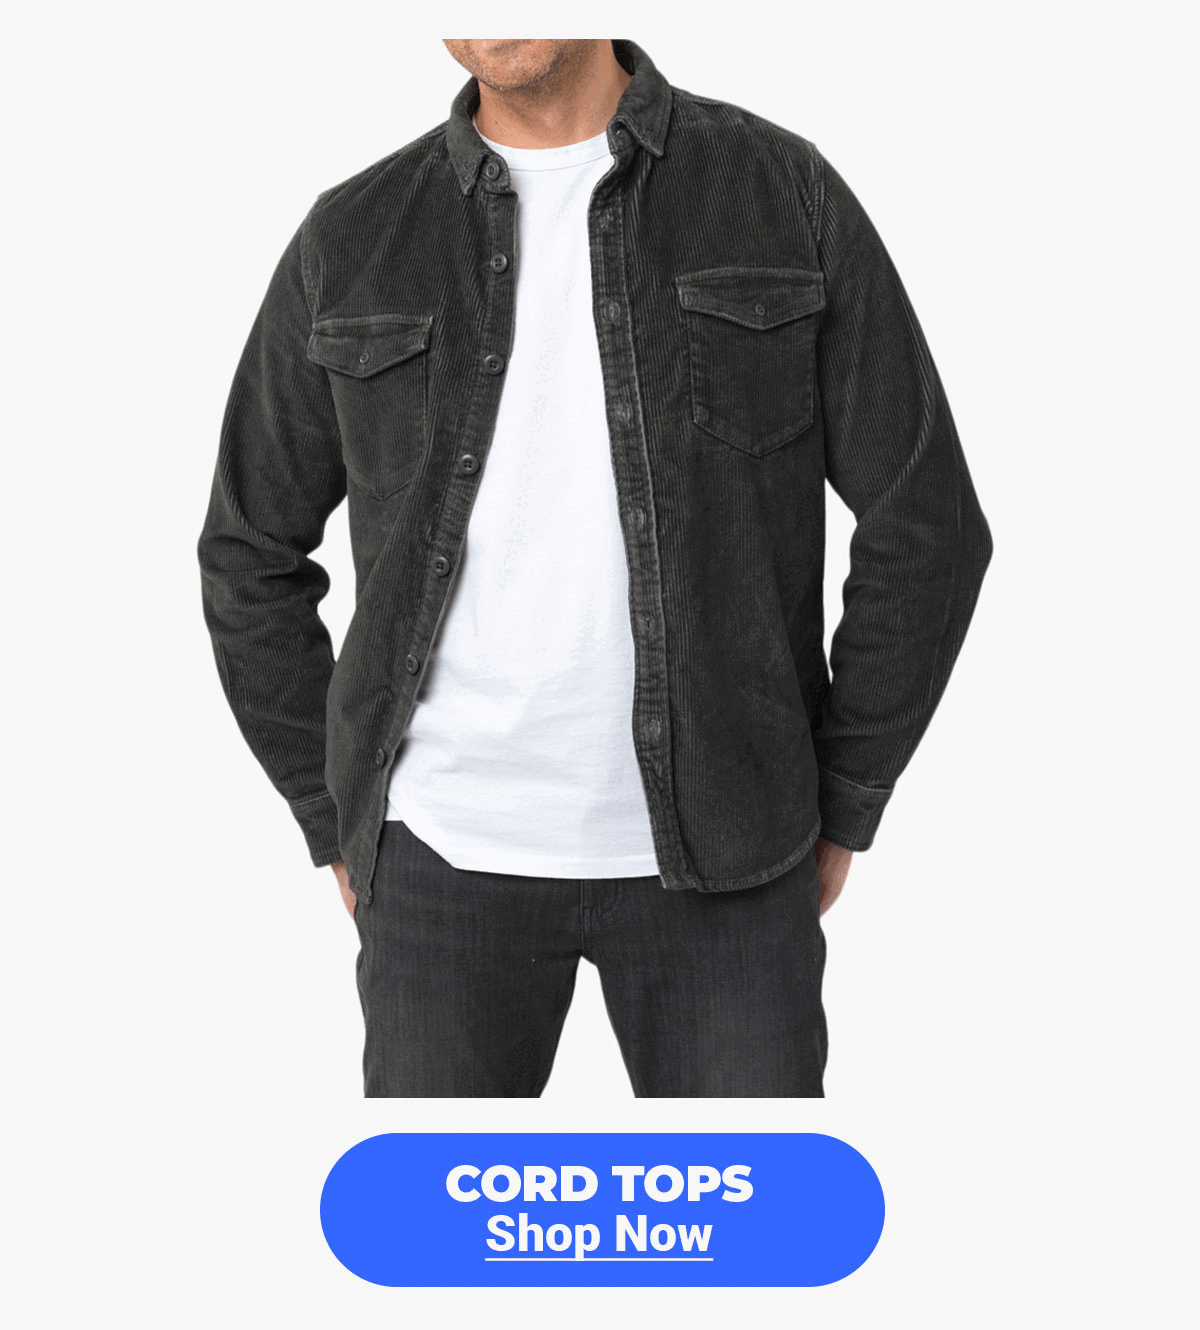 Button: Cord Tops - Shop Now